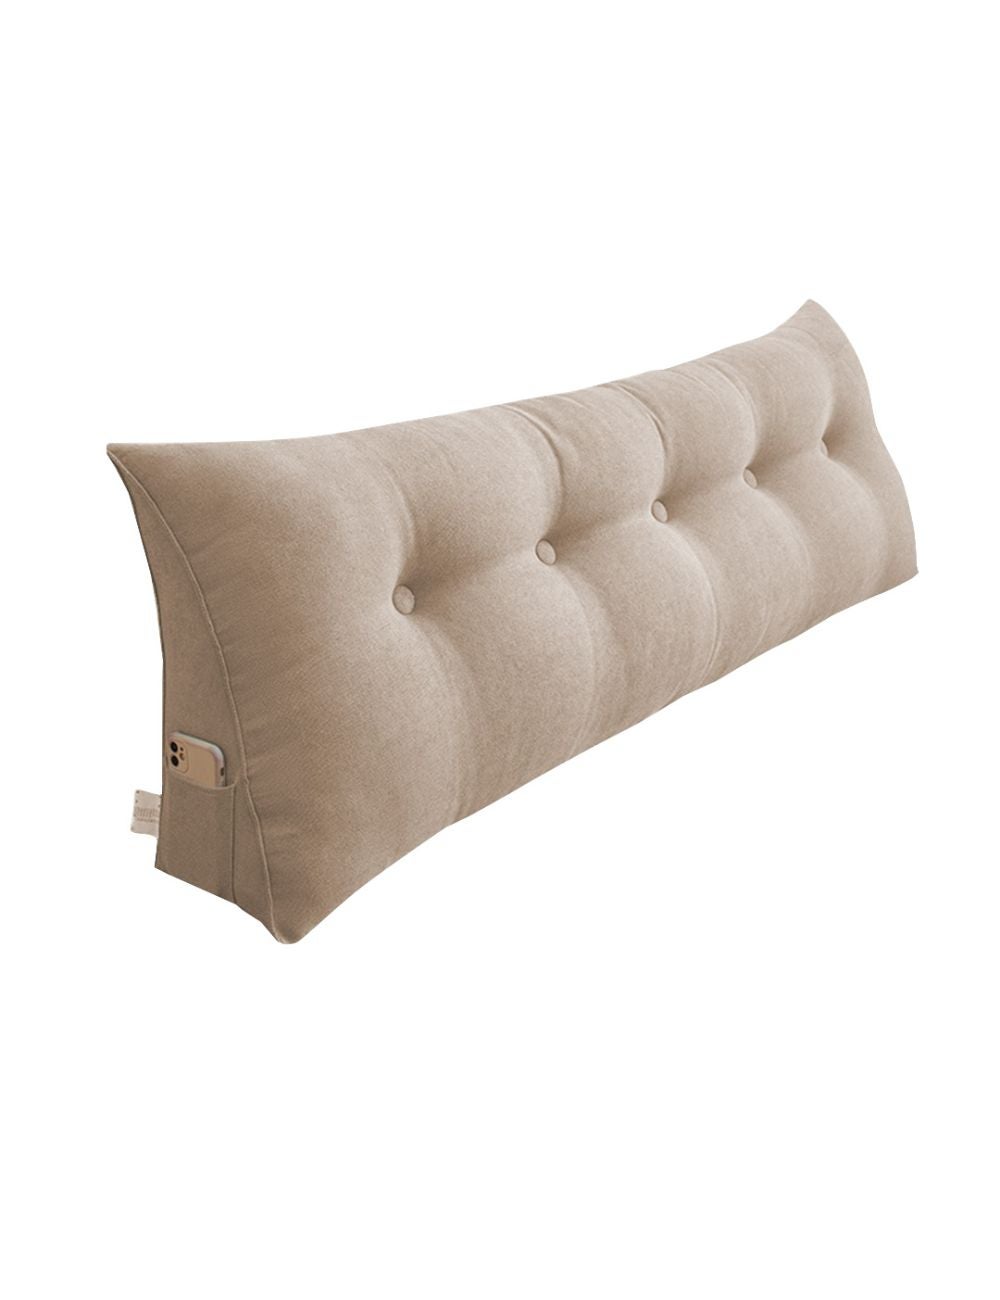 180CM Comfort Rest Triangular Wedge Lumbar Waist Back Pillow Sofa Cushion  Bed Pillow living Room Lumbar Pad Home Decor